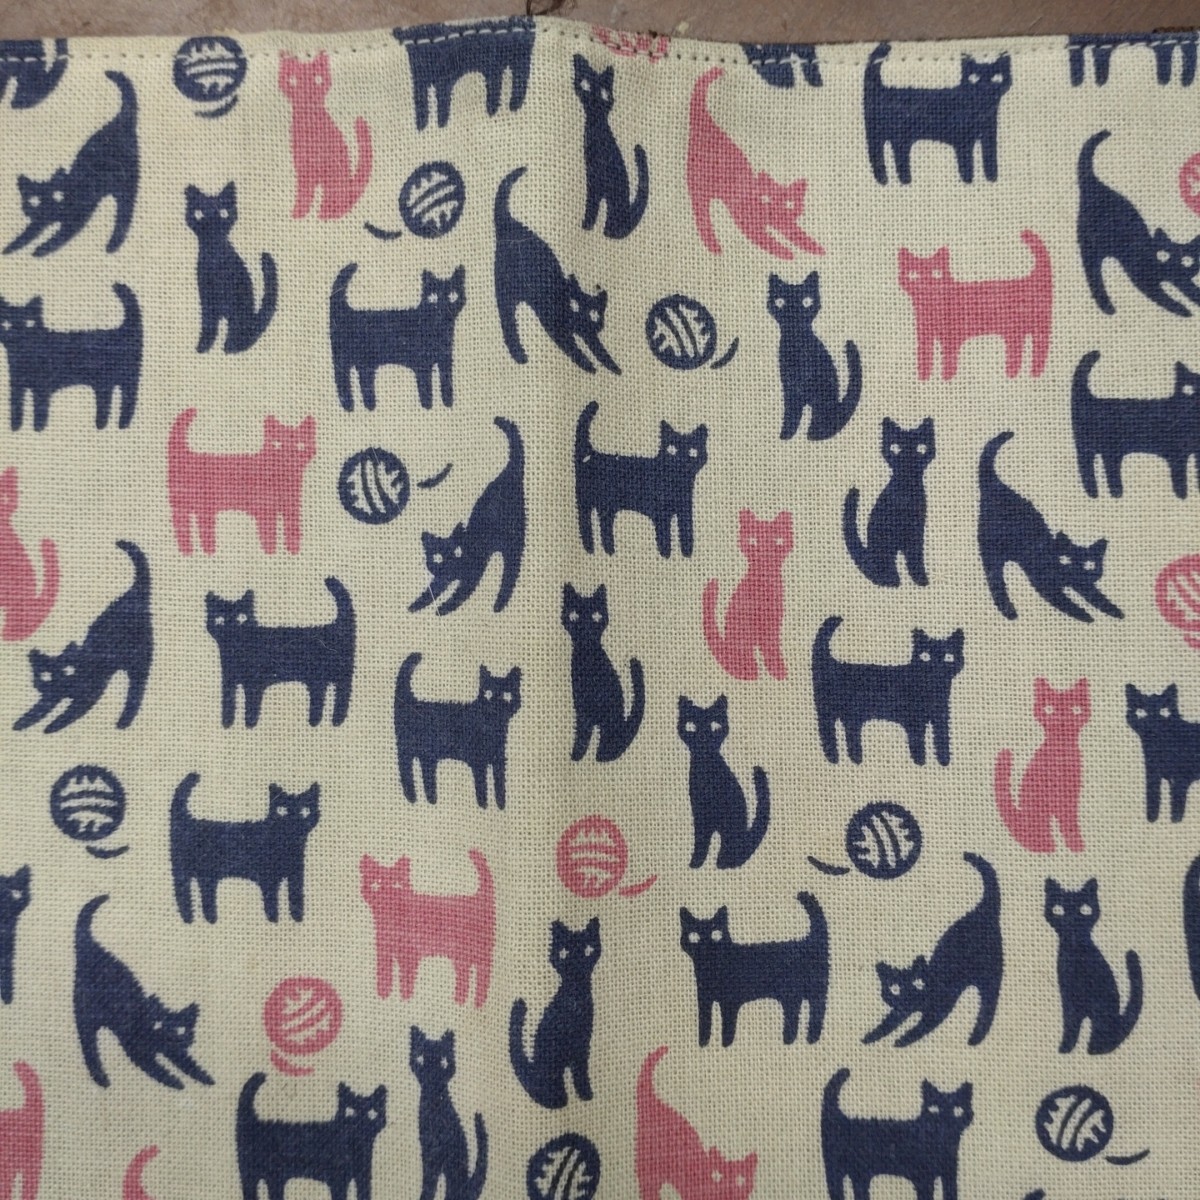  book cover cat pattern 